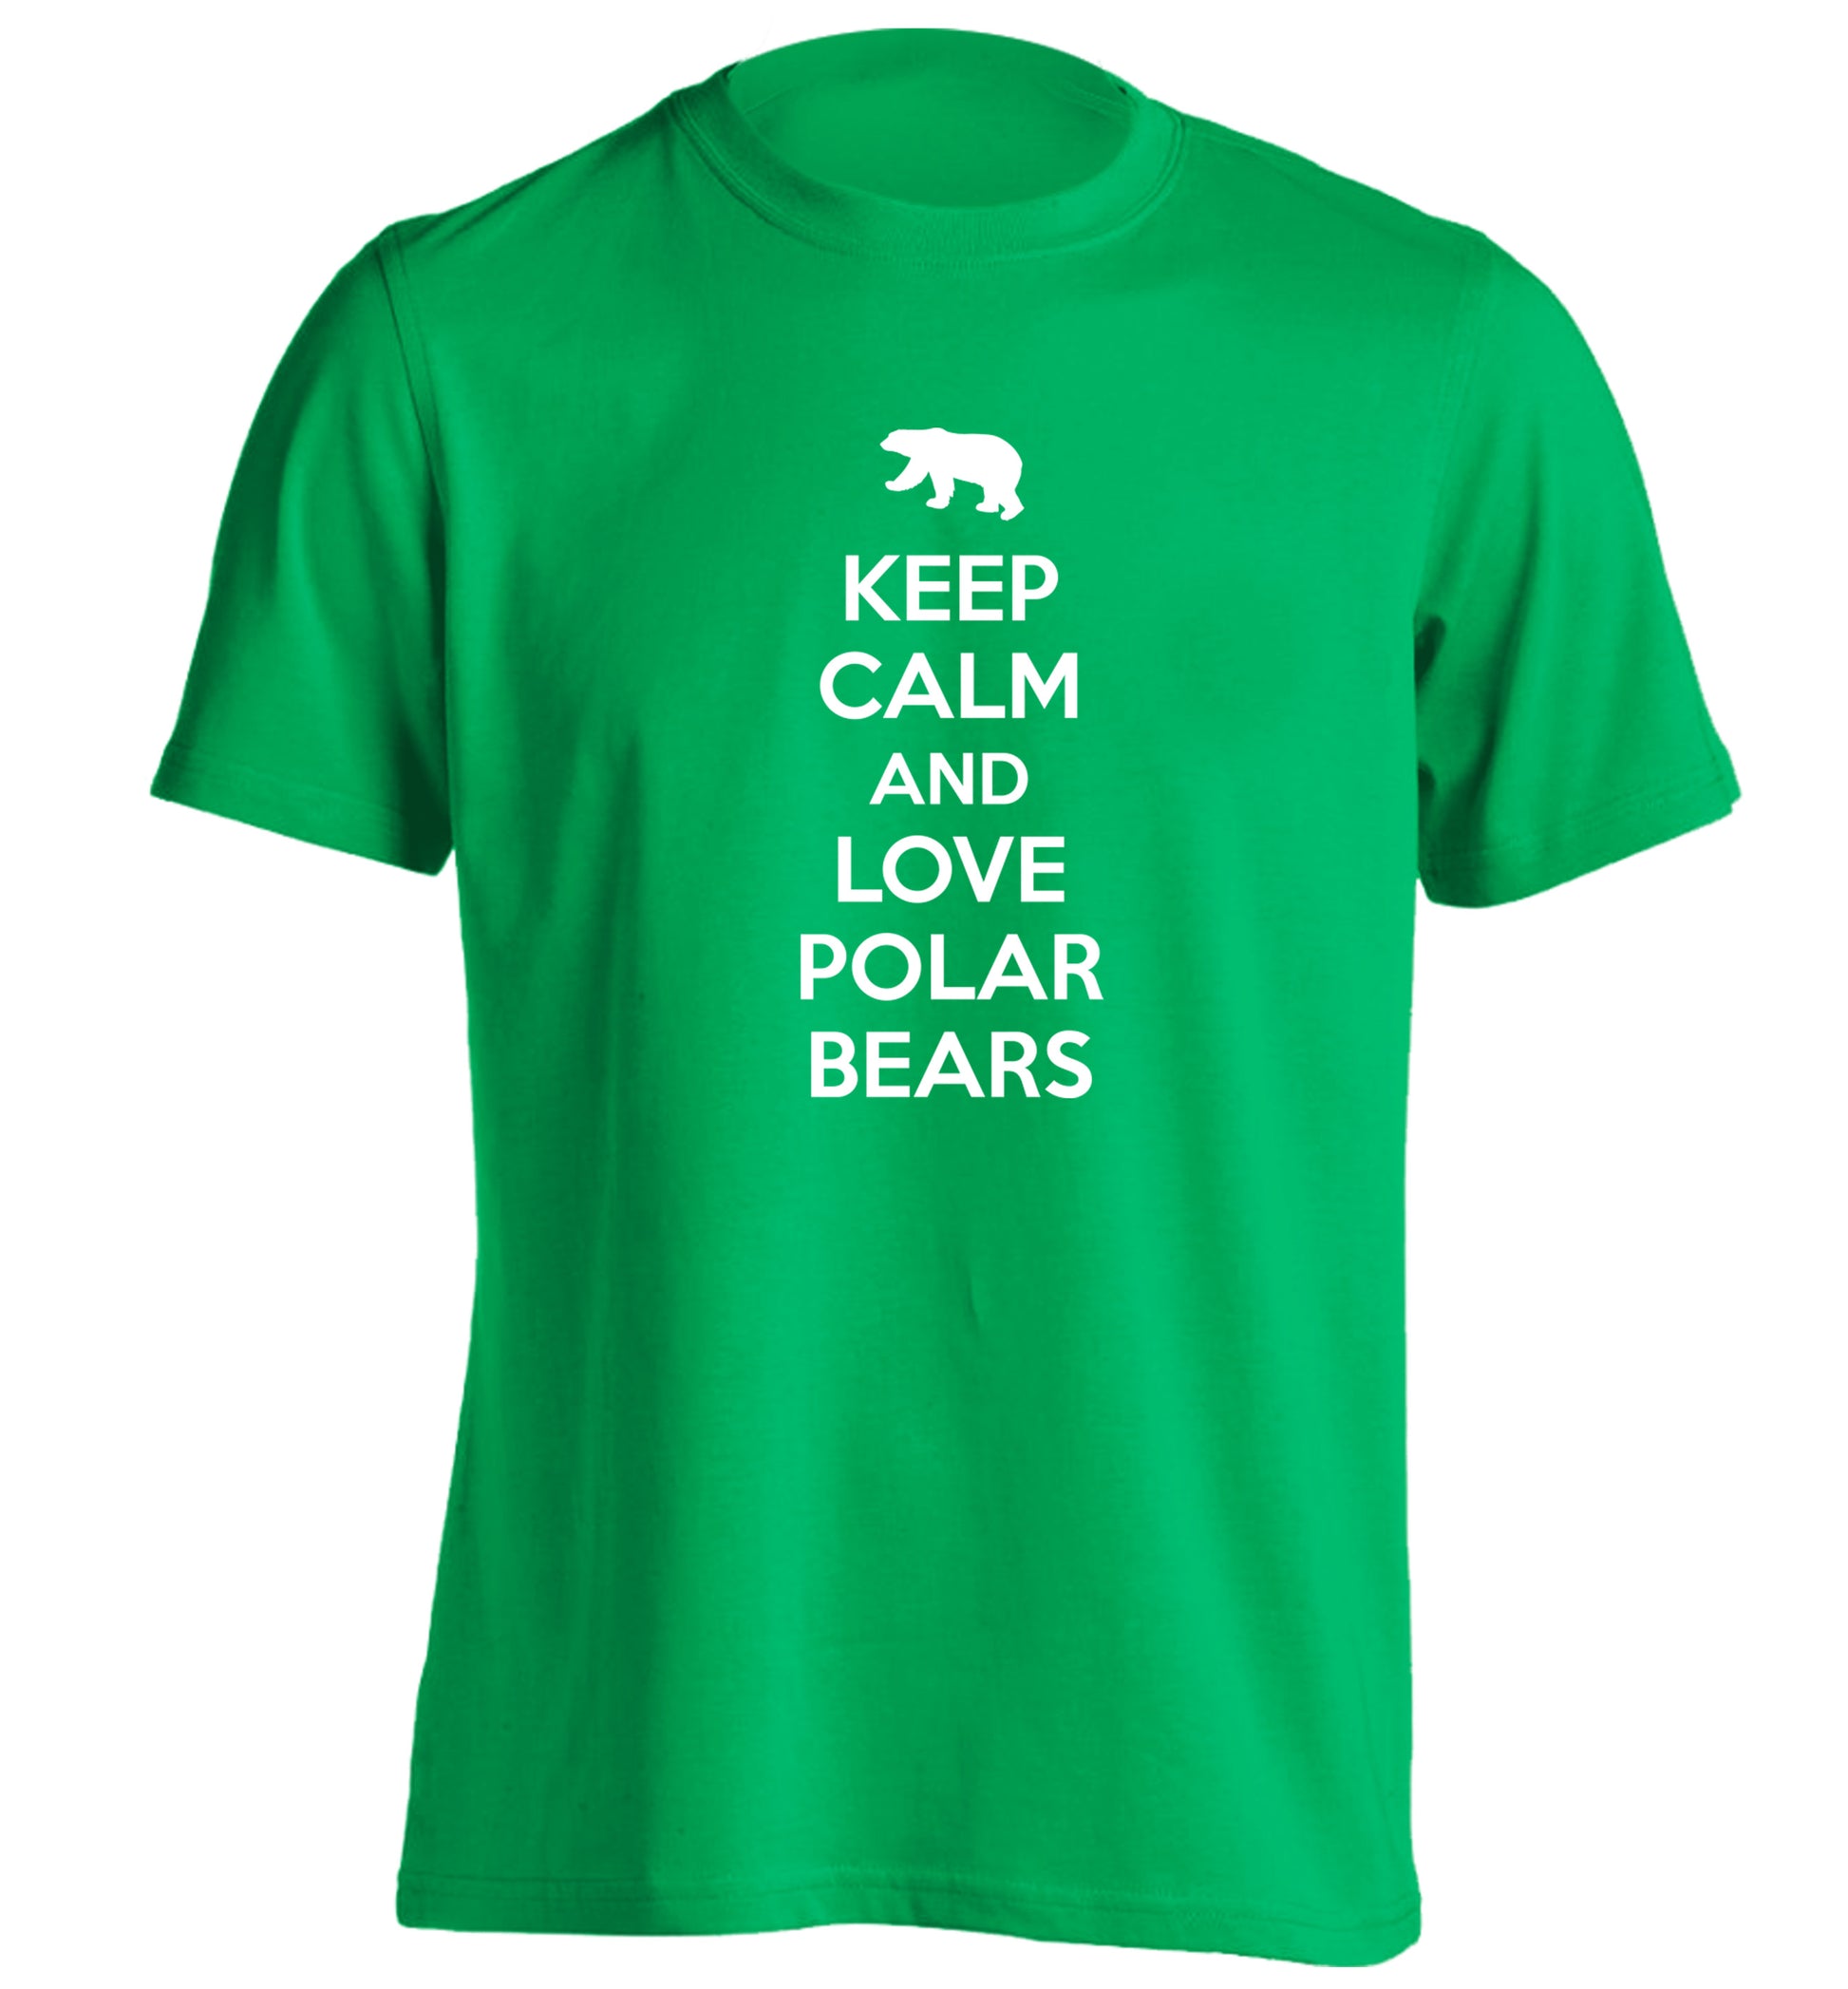 Keep calm and love polar bears adults unisex green Tshirt 2XL